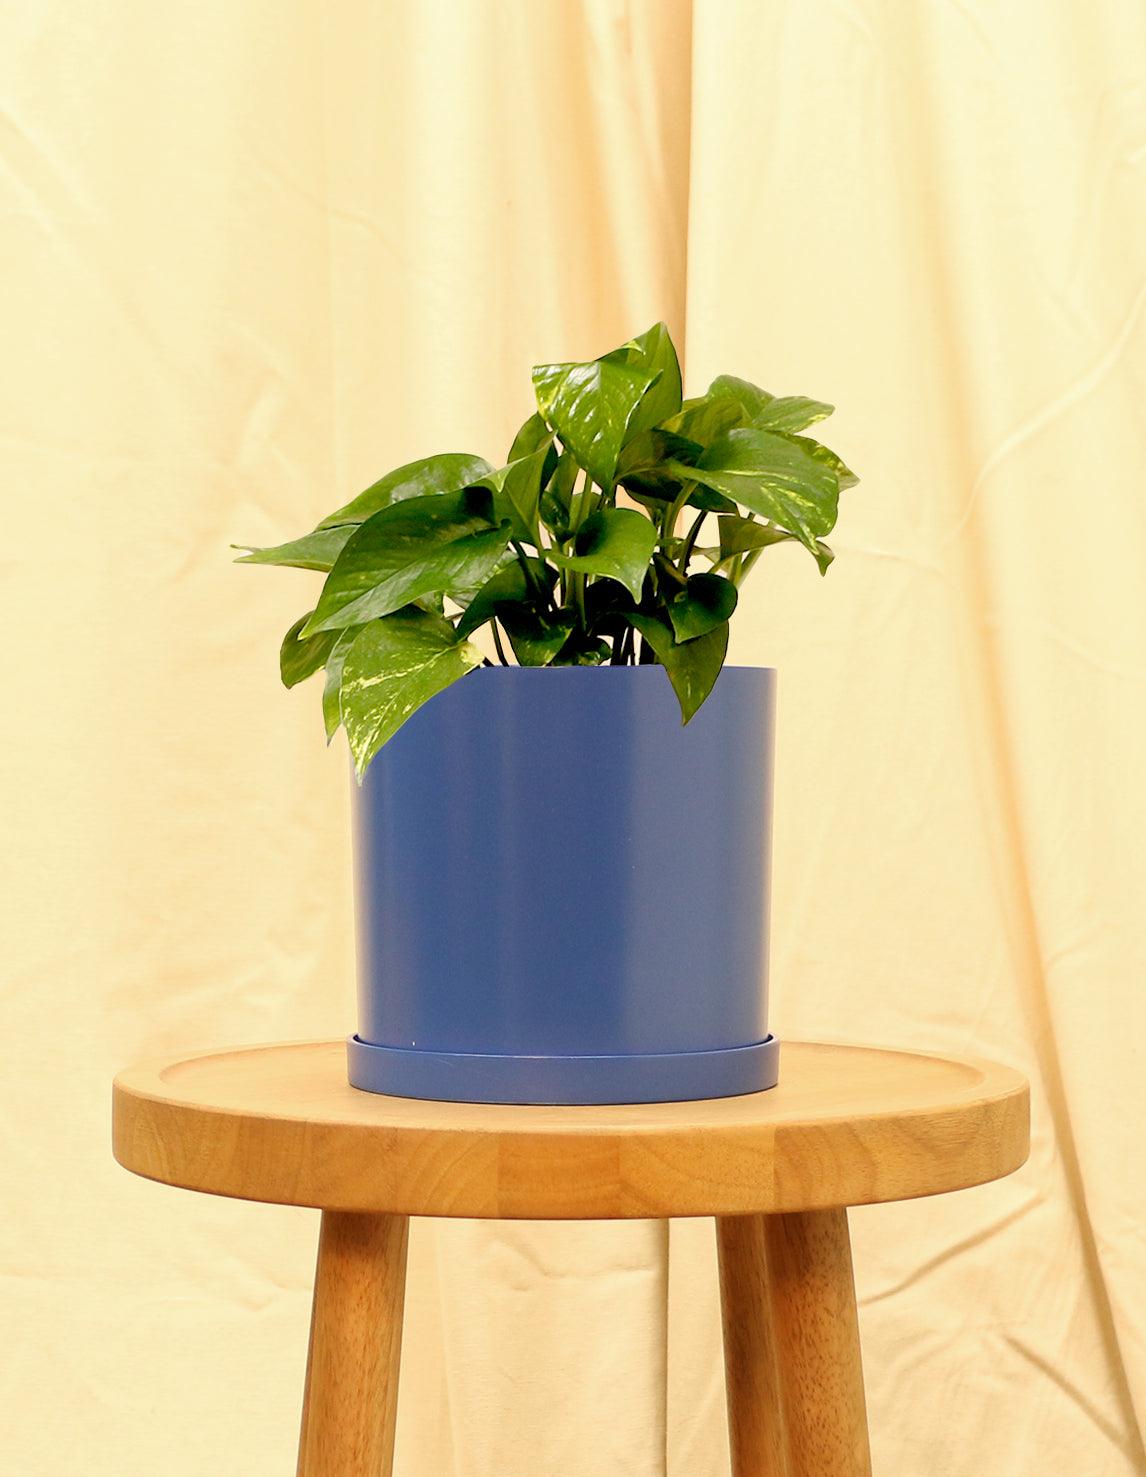 Medium Golden Devils Ivy Pothos Plant in blue pot.